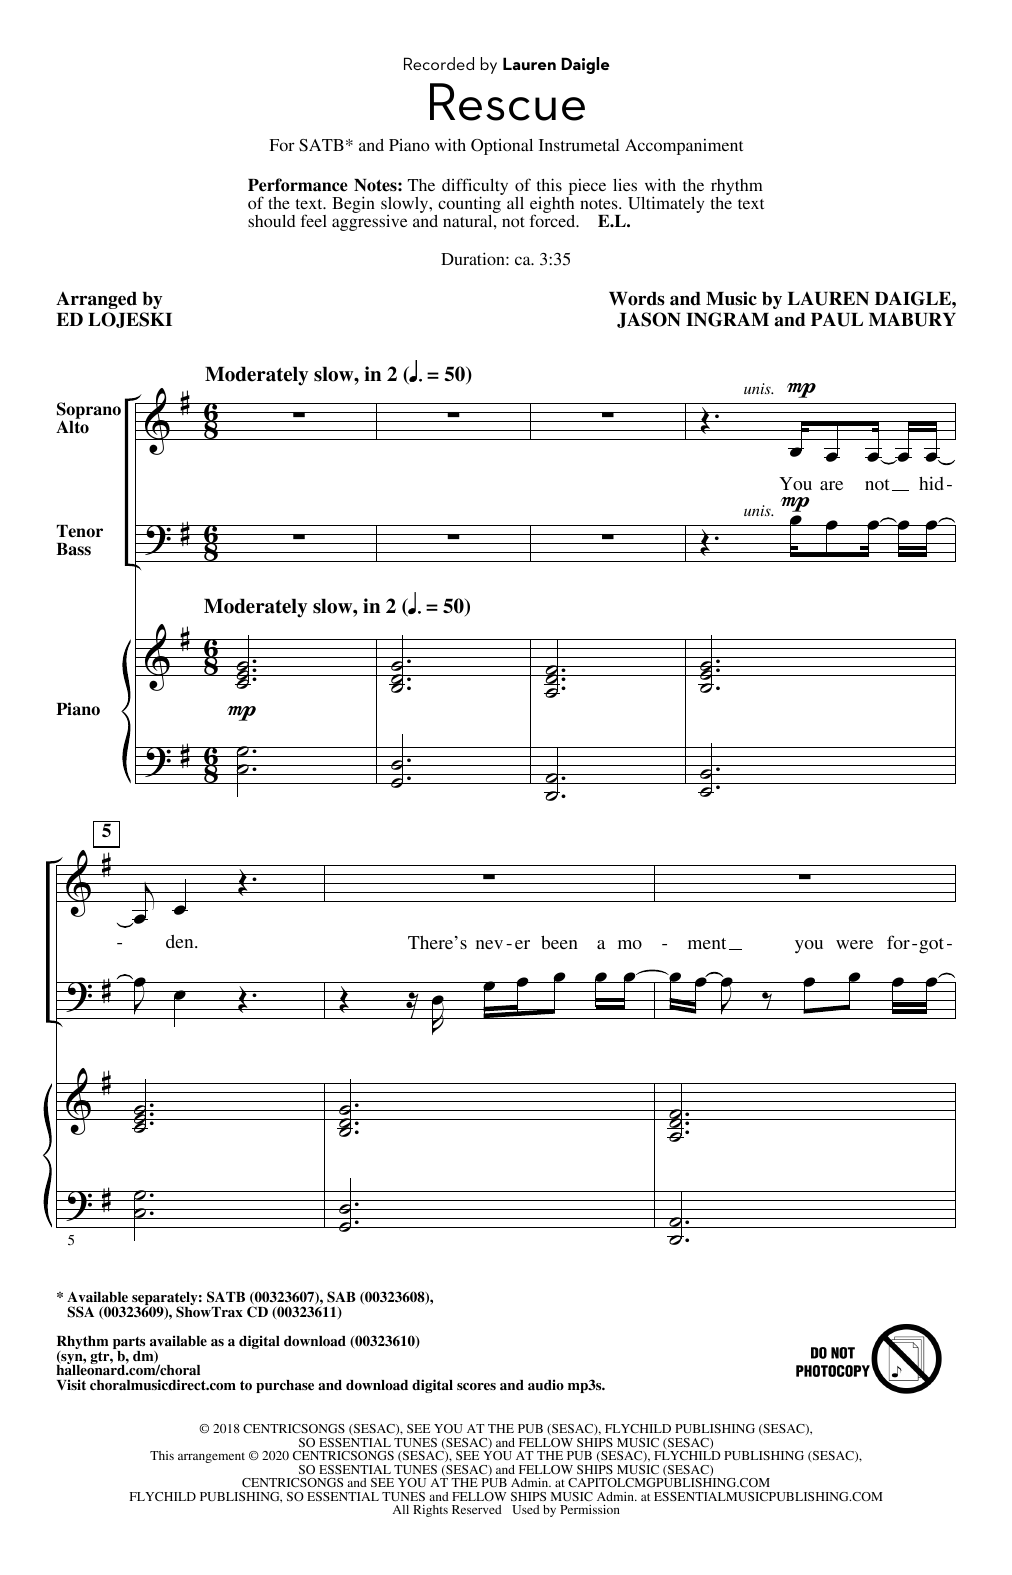 Lauren Daigle Rescue (arr. Ed Lojeski) Sheet Music Notes & Chords for SAB Choir - Download or Print PDF